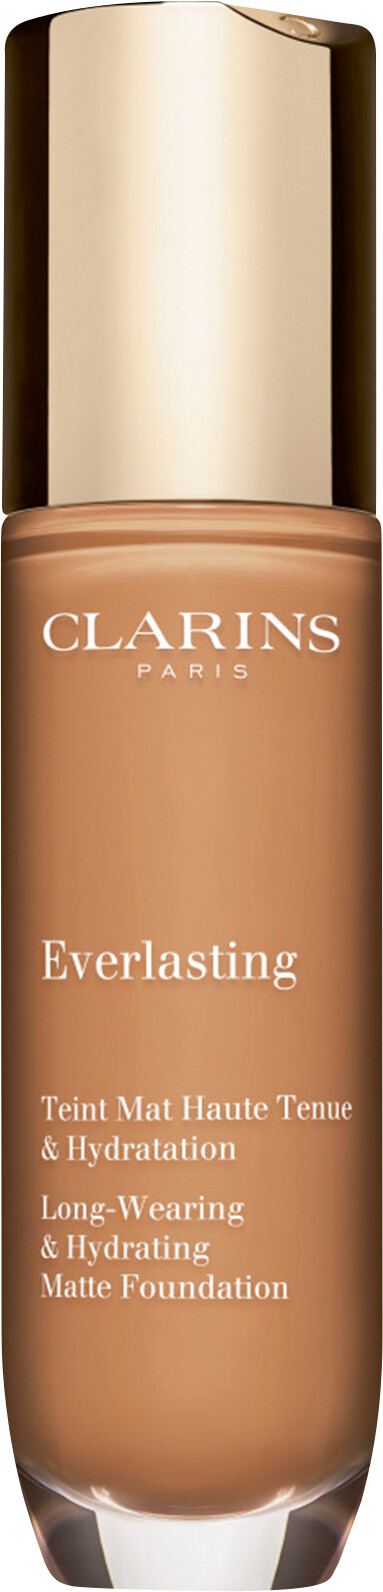 Clarins Everlasting Long-Wearing & Hydrating Matte Foundation 30ml 113C - Chestnut